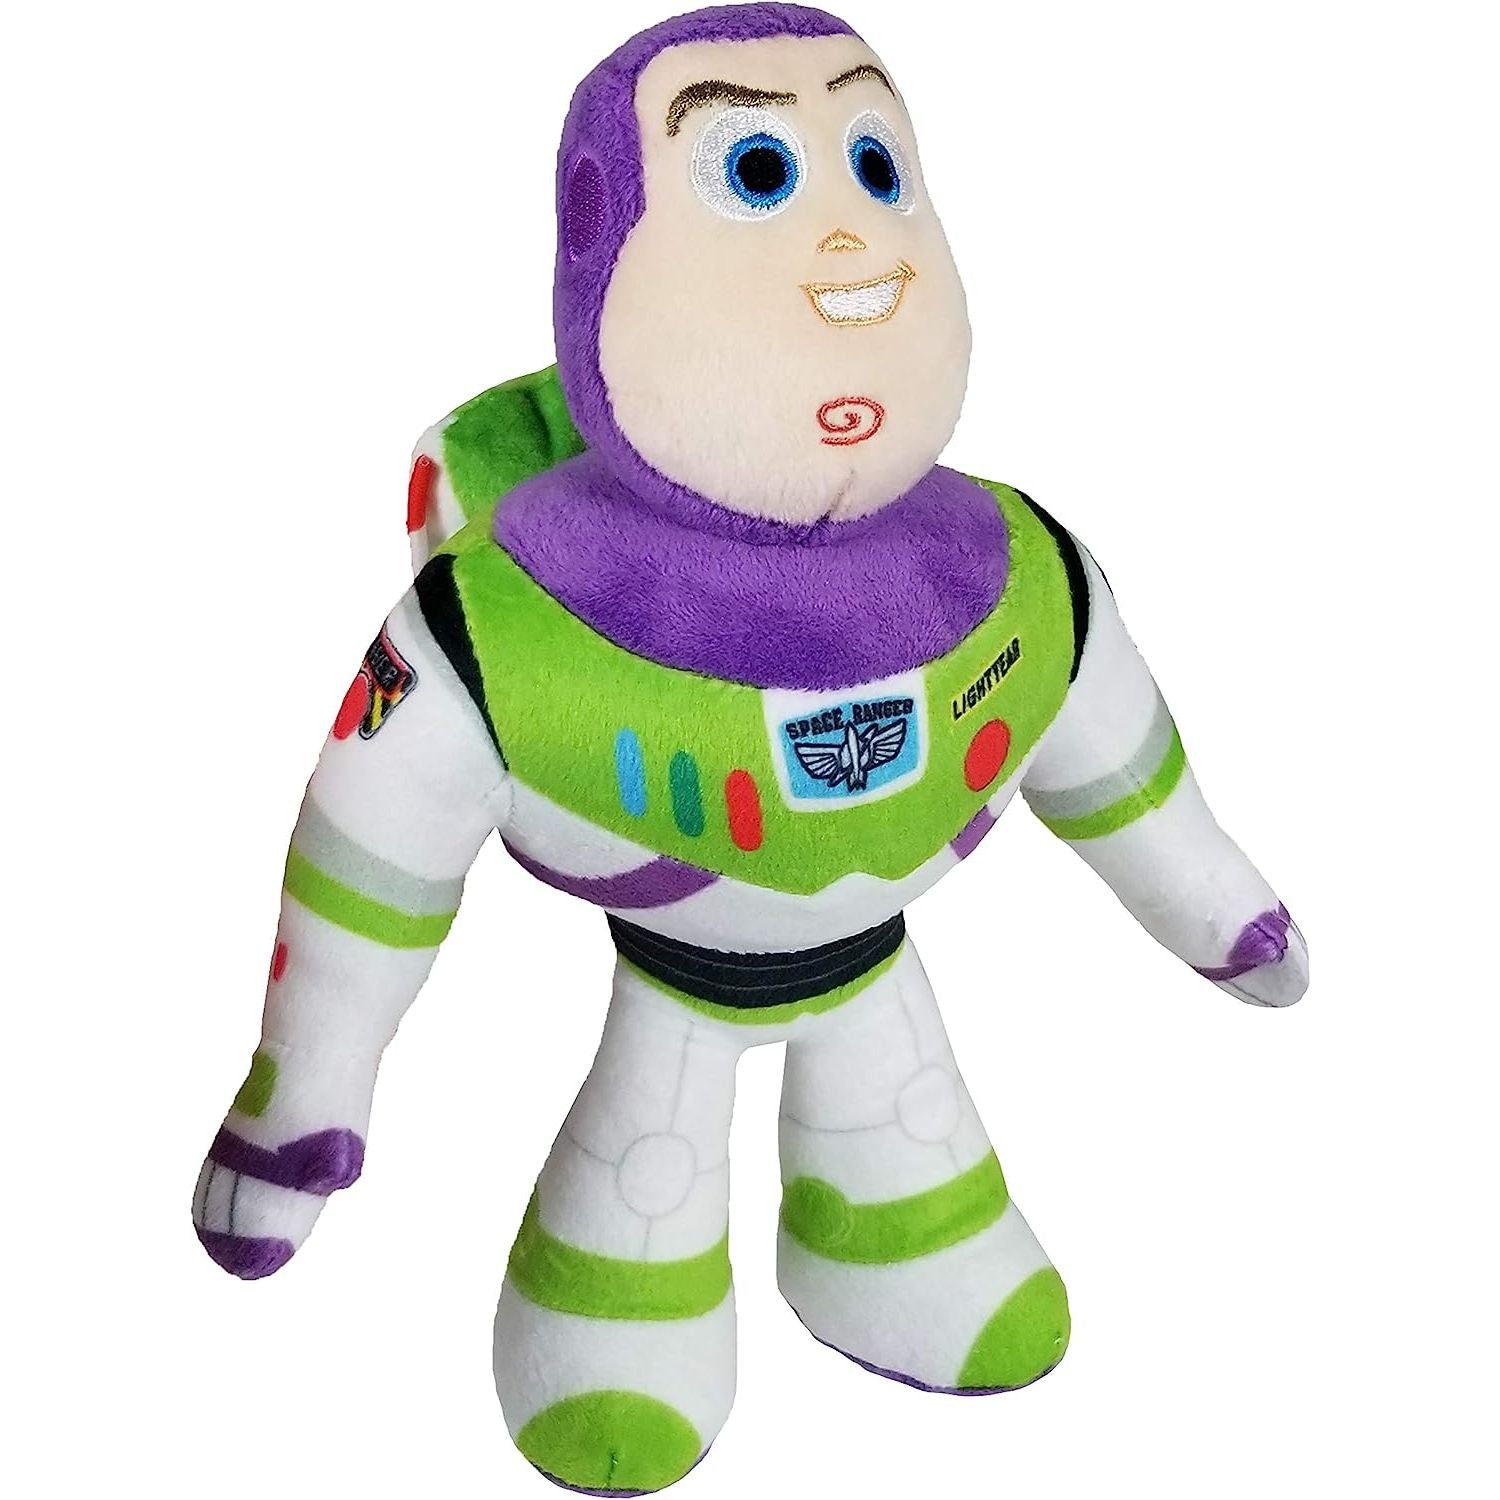 Disney - Toy Story - Buzz Lightyear 10" Plush Toy - Heretoserveyou